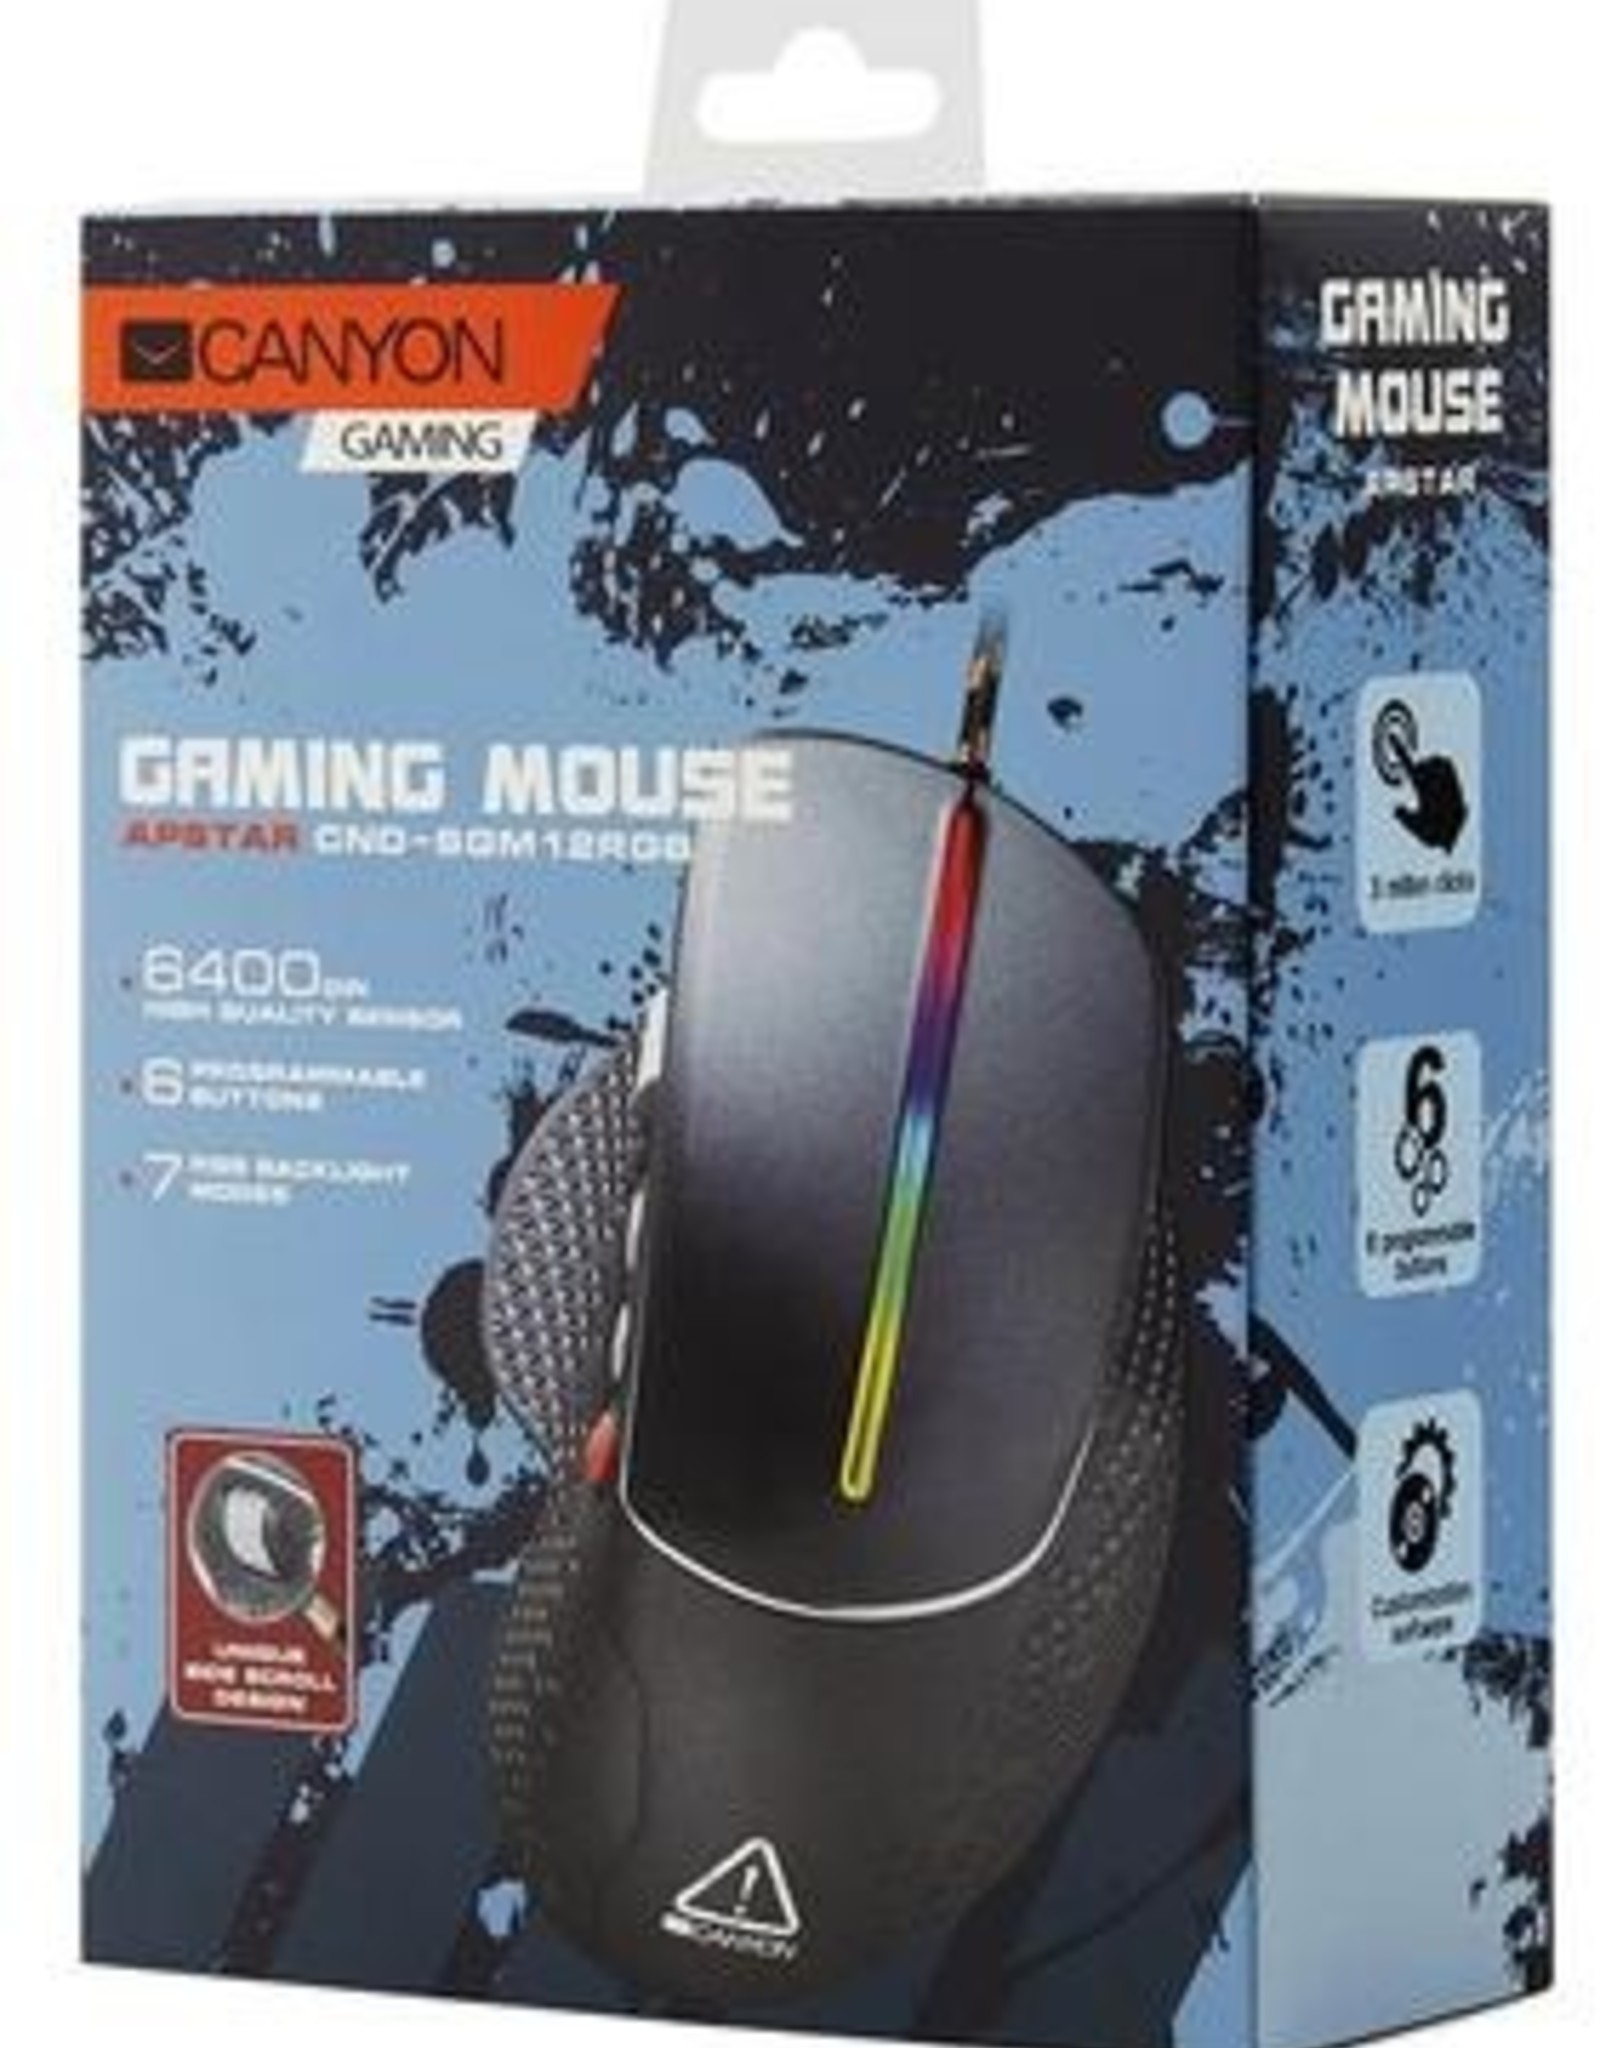 Canyon Canyon 6 button RGB gaming mouse